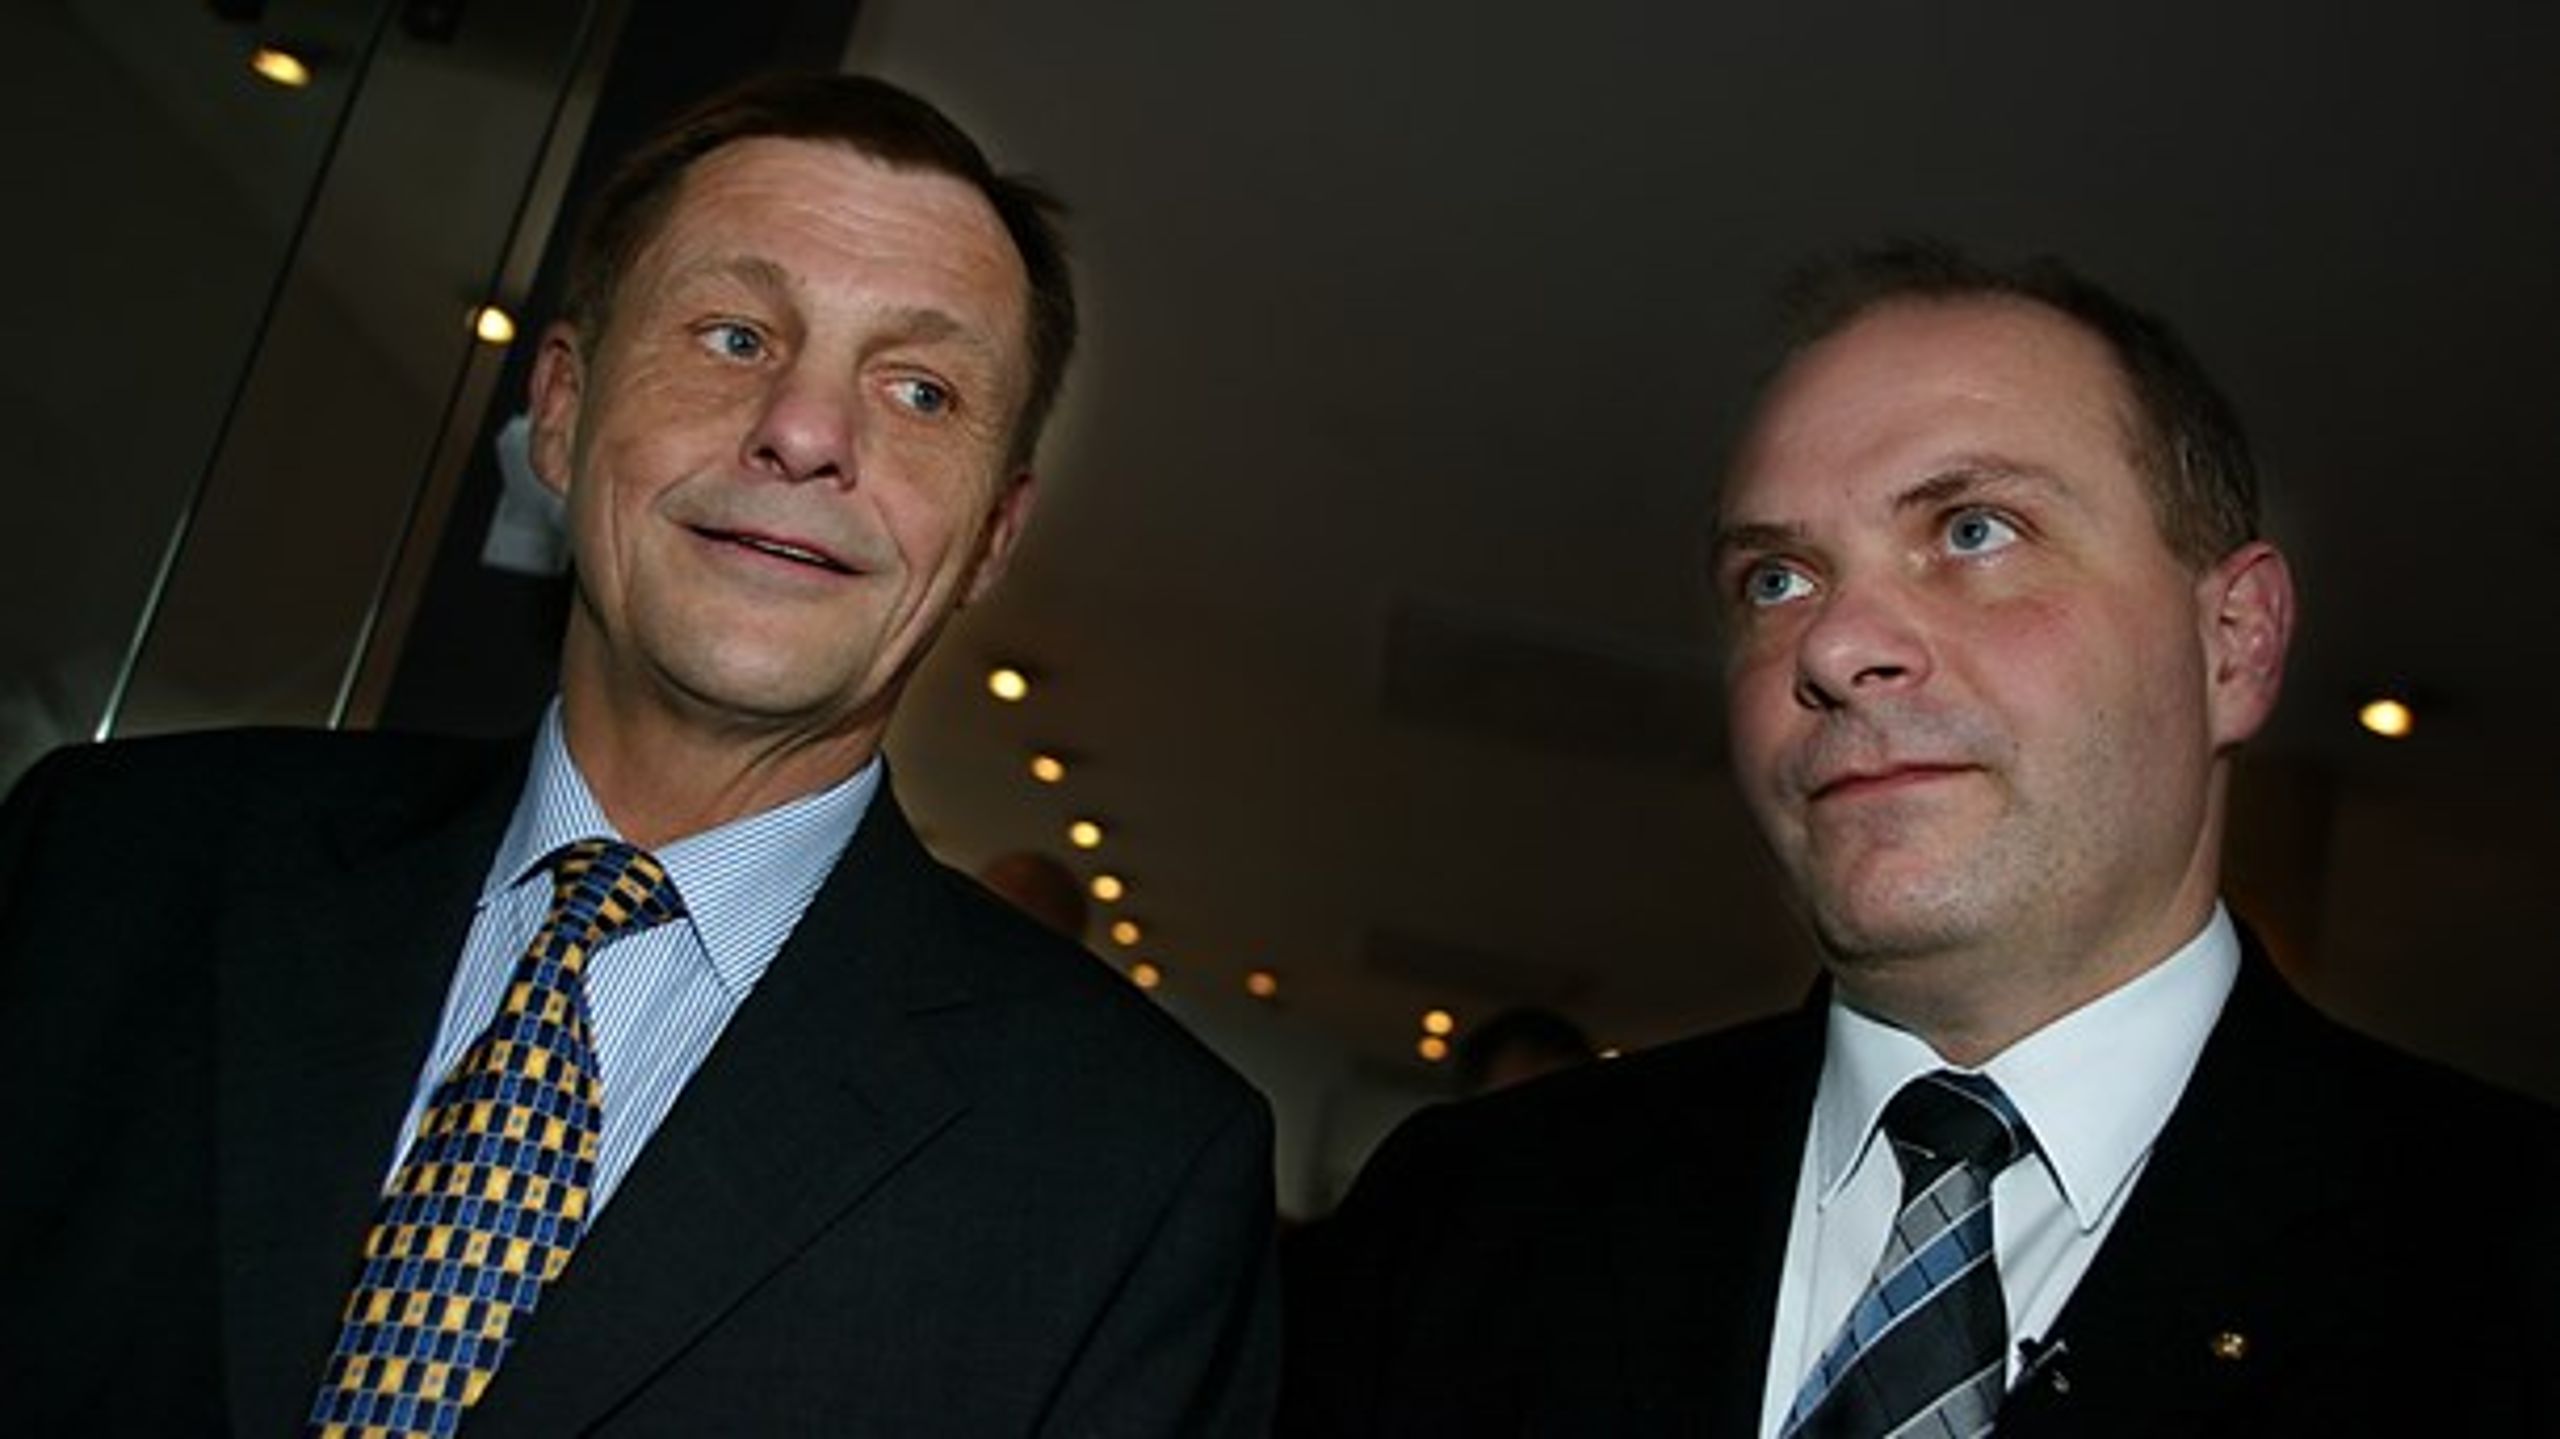 Den tidligere forsvarsminister&nbsp;Svend Aage Jensby (V) kritiserer i dagens Jyllands-Posten sin efterfølger på posten, Søren Gade (V).&nbsp;